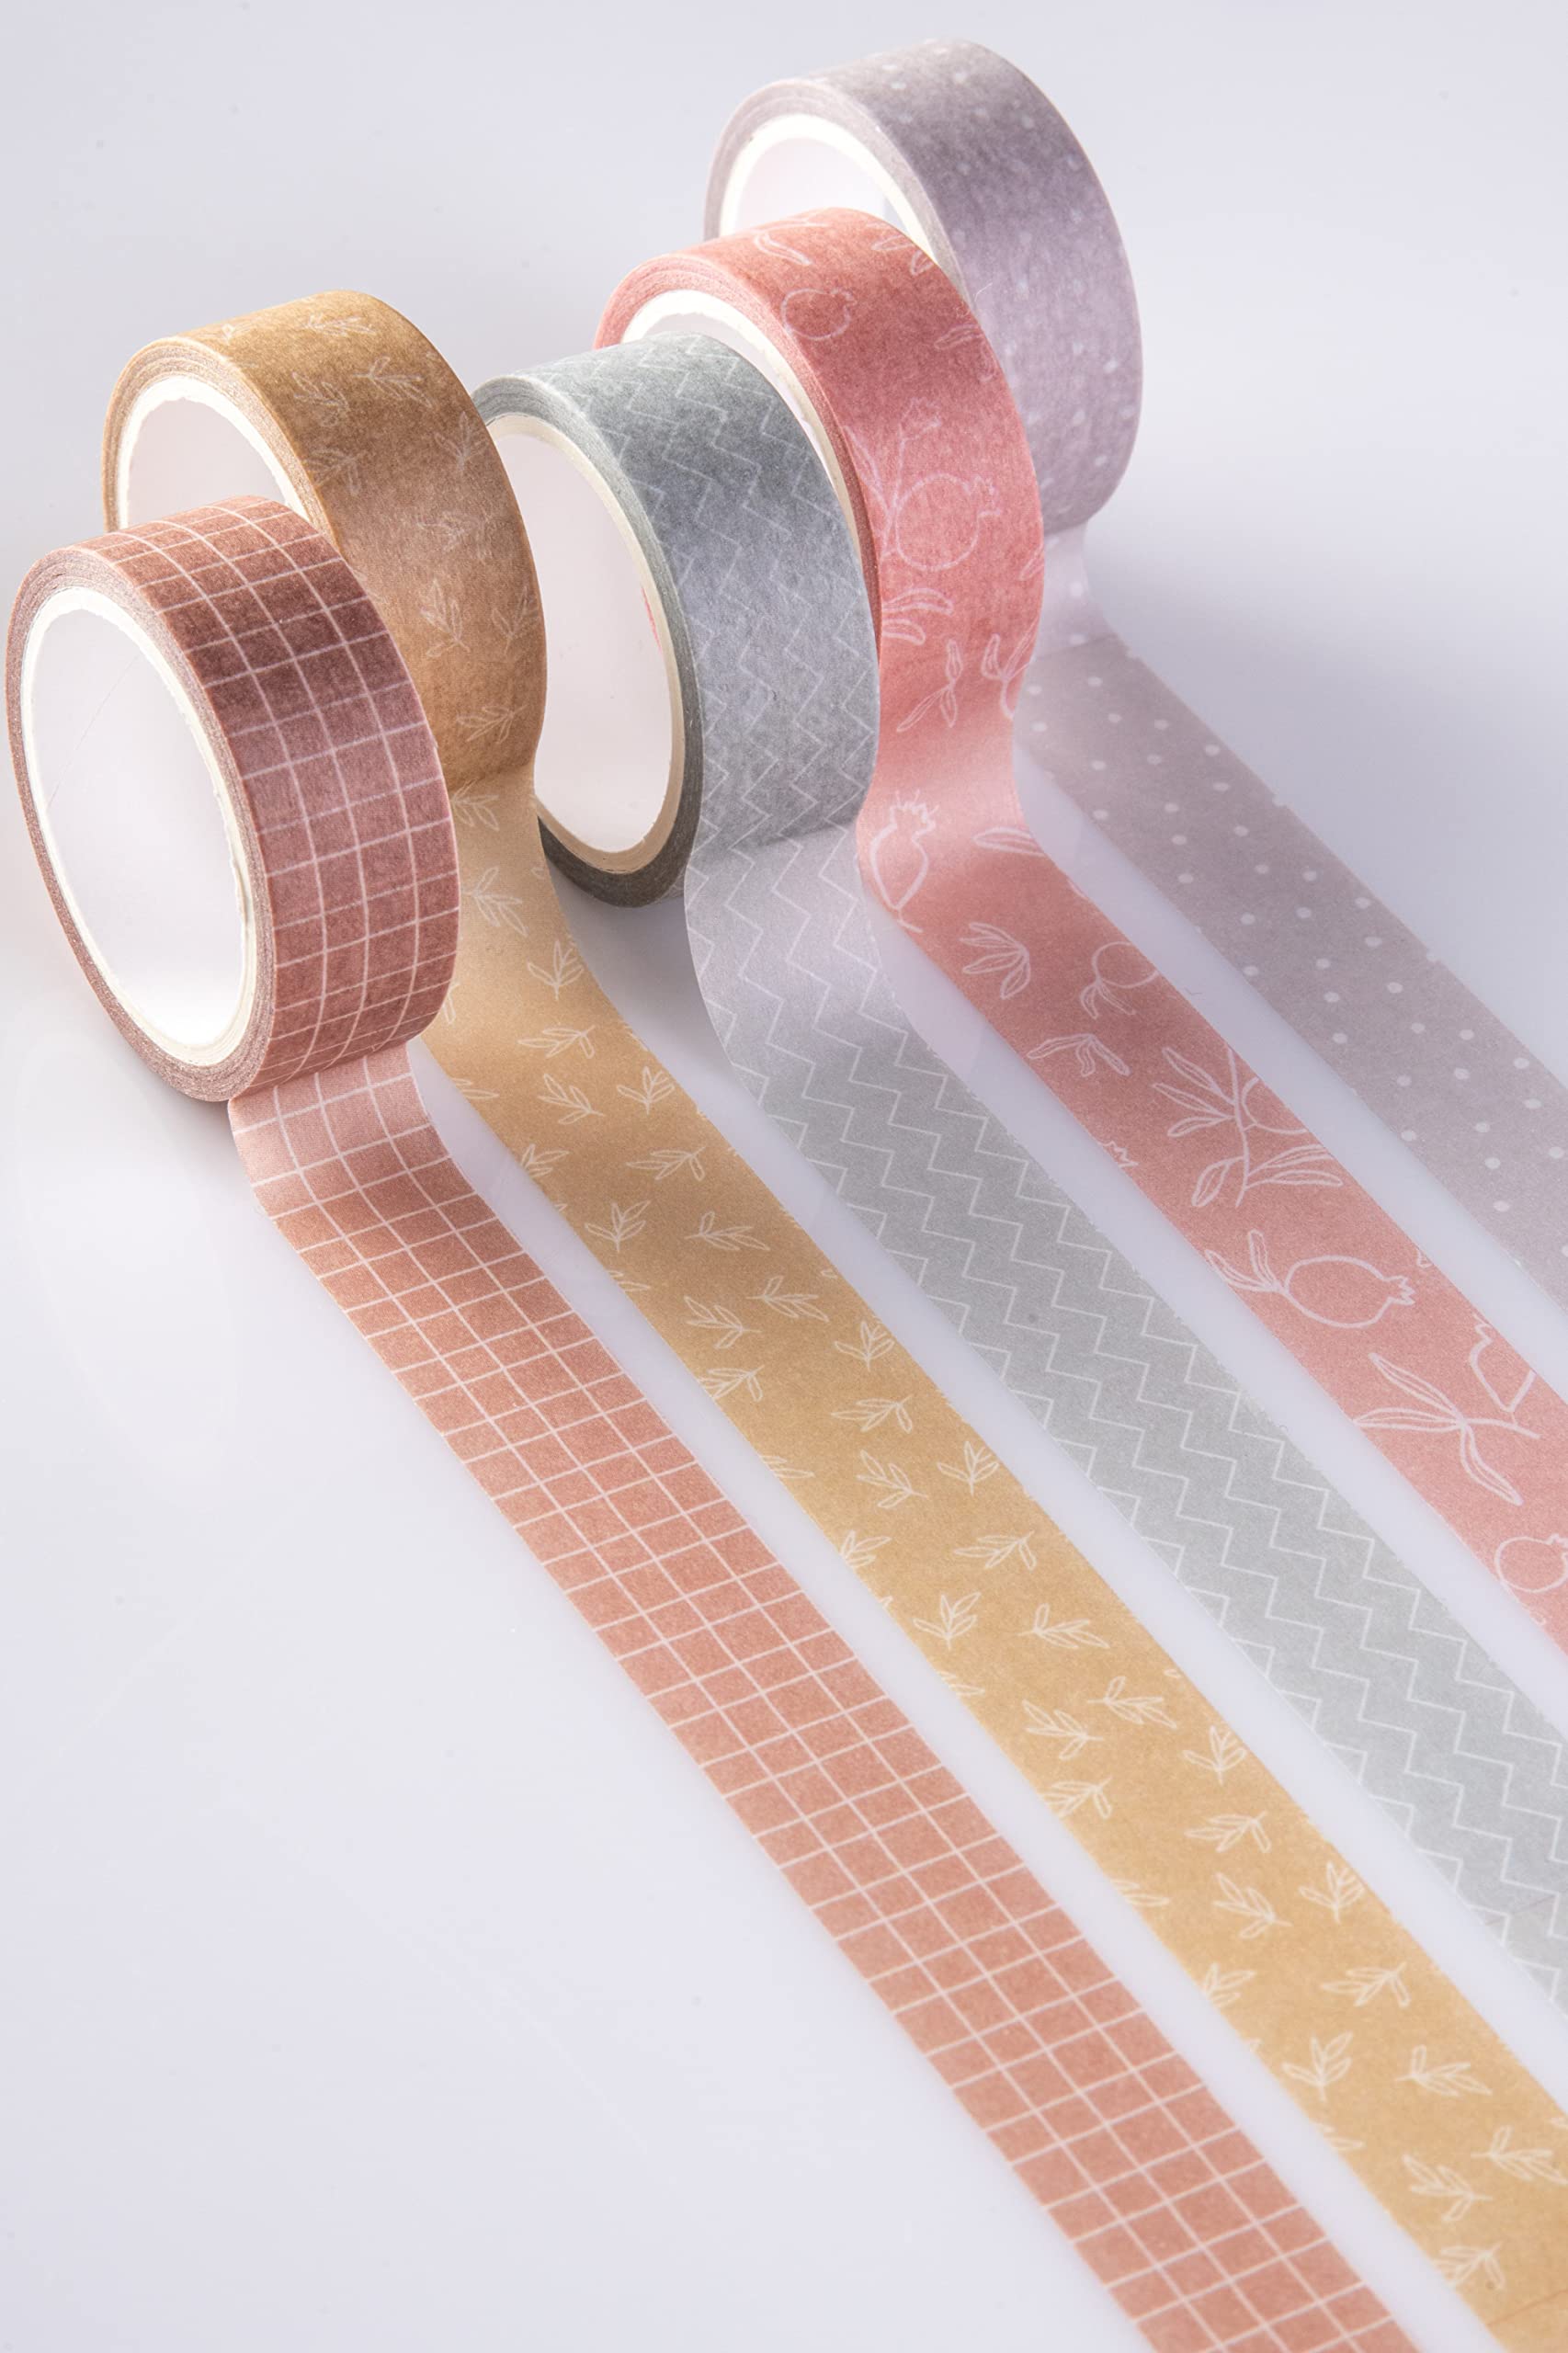 DIVERSEBEE Pastel Washi Tape Set, 5 Rolls Decorative Scrapbook